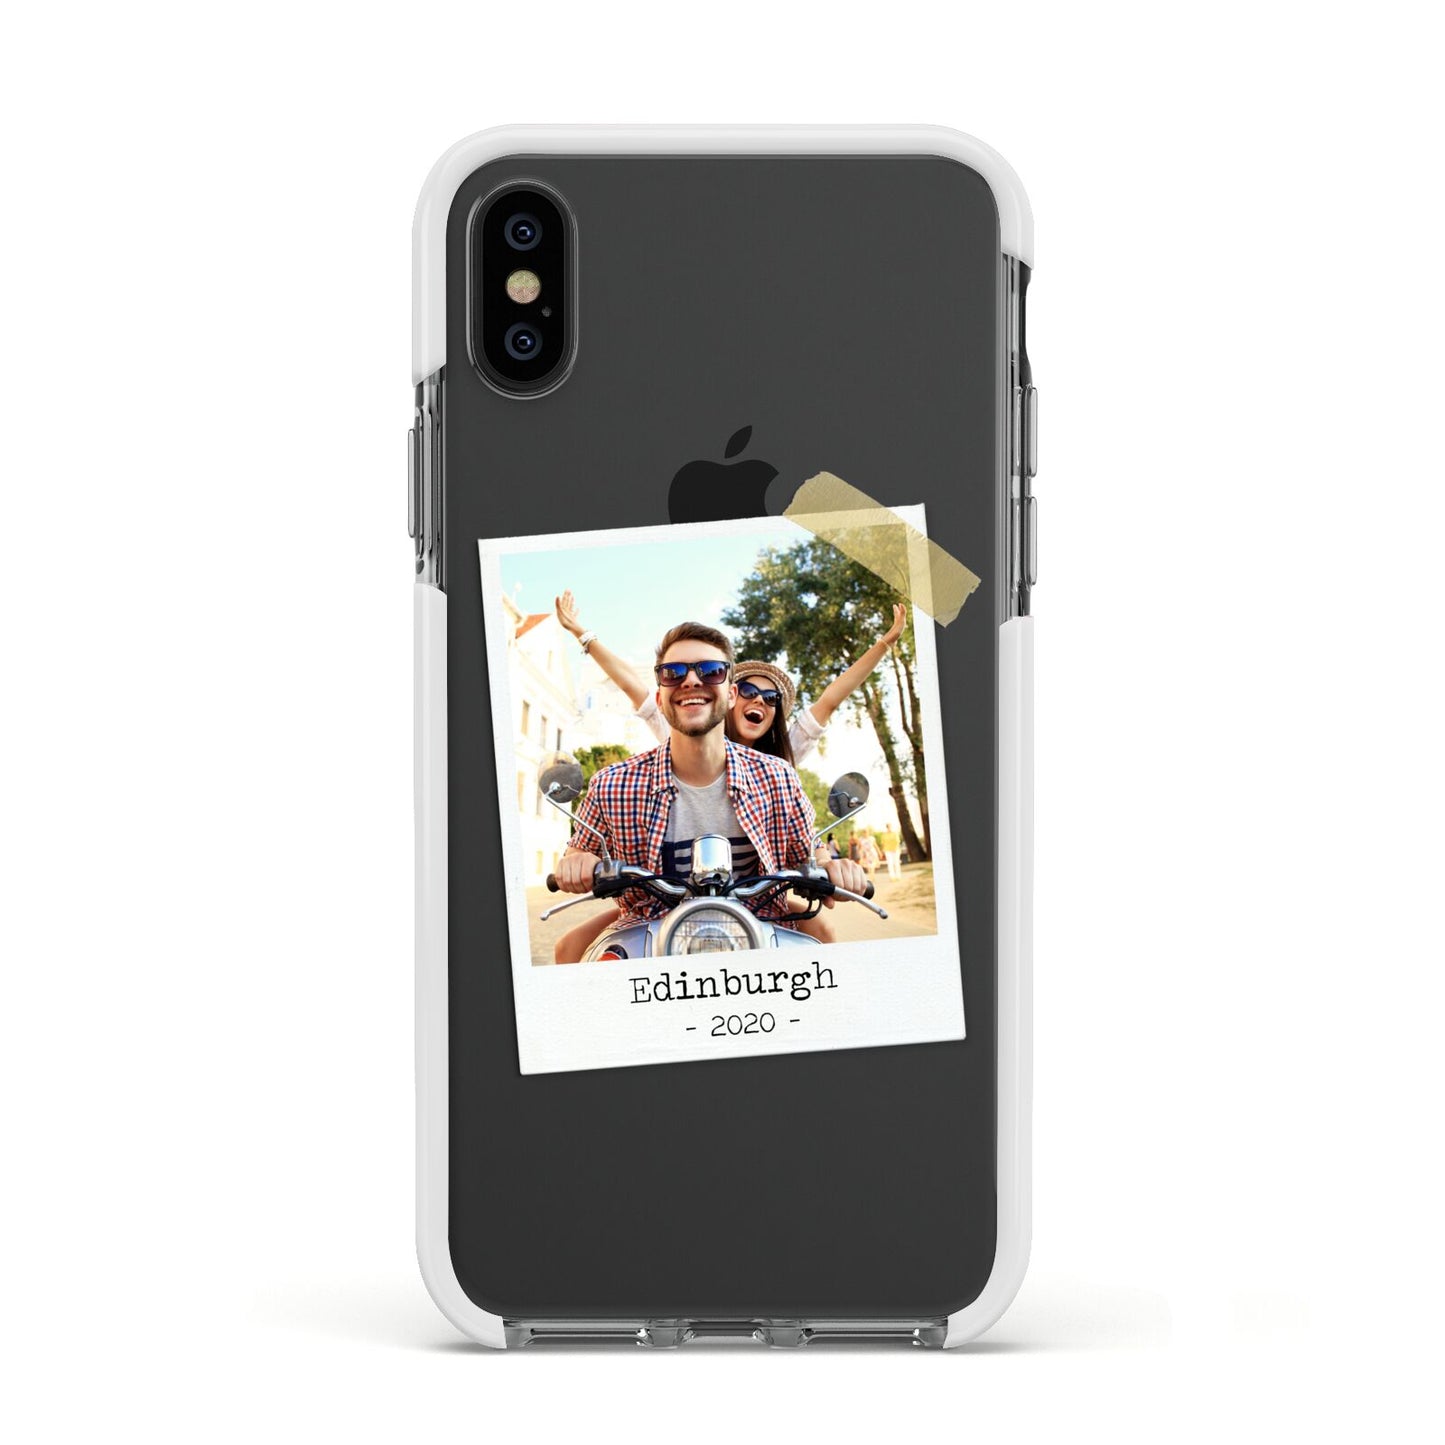 Taped Holiday Snap Photo Upload Apple iPhone Xs Impact Case White Edge on Black Phone